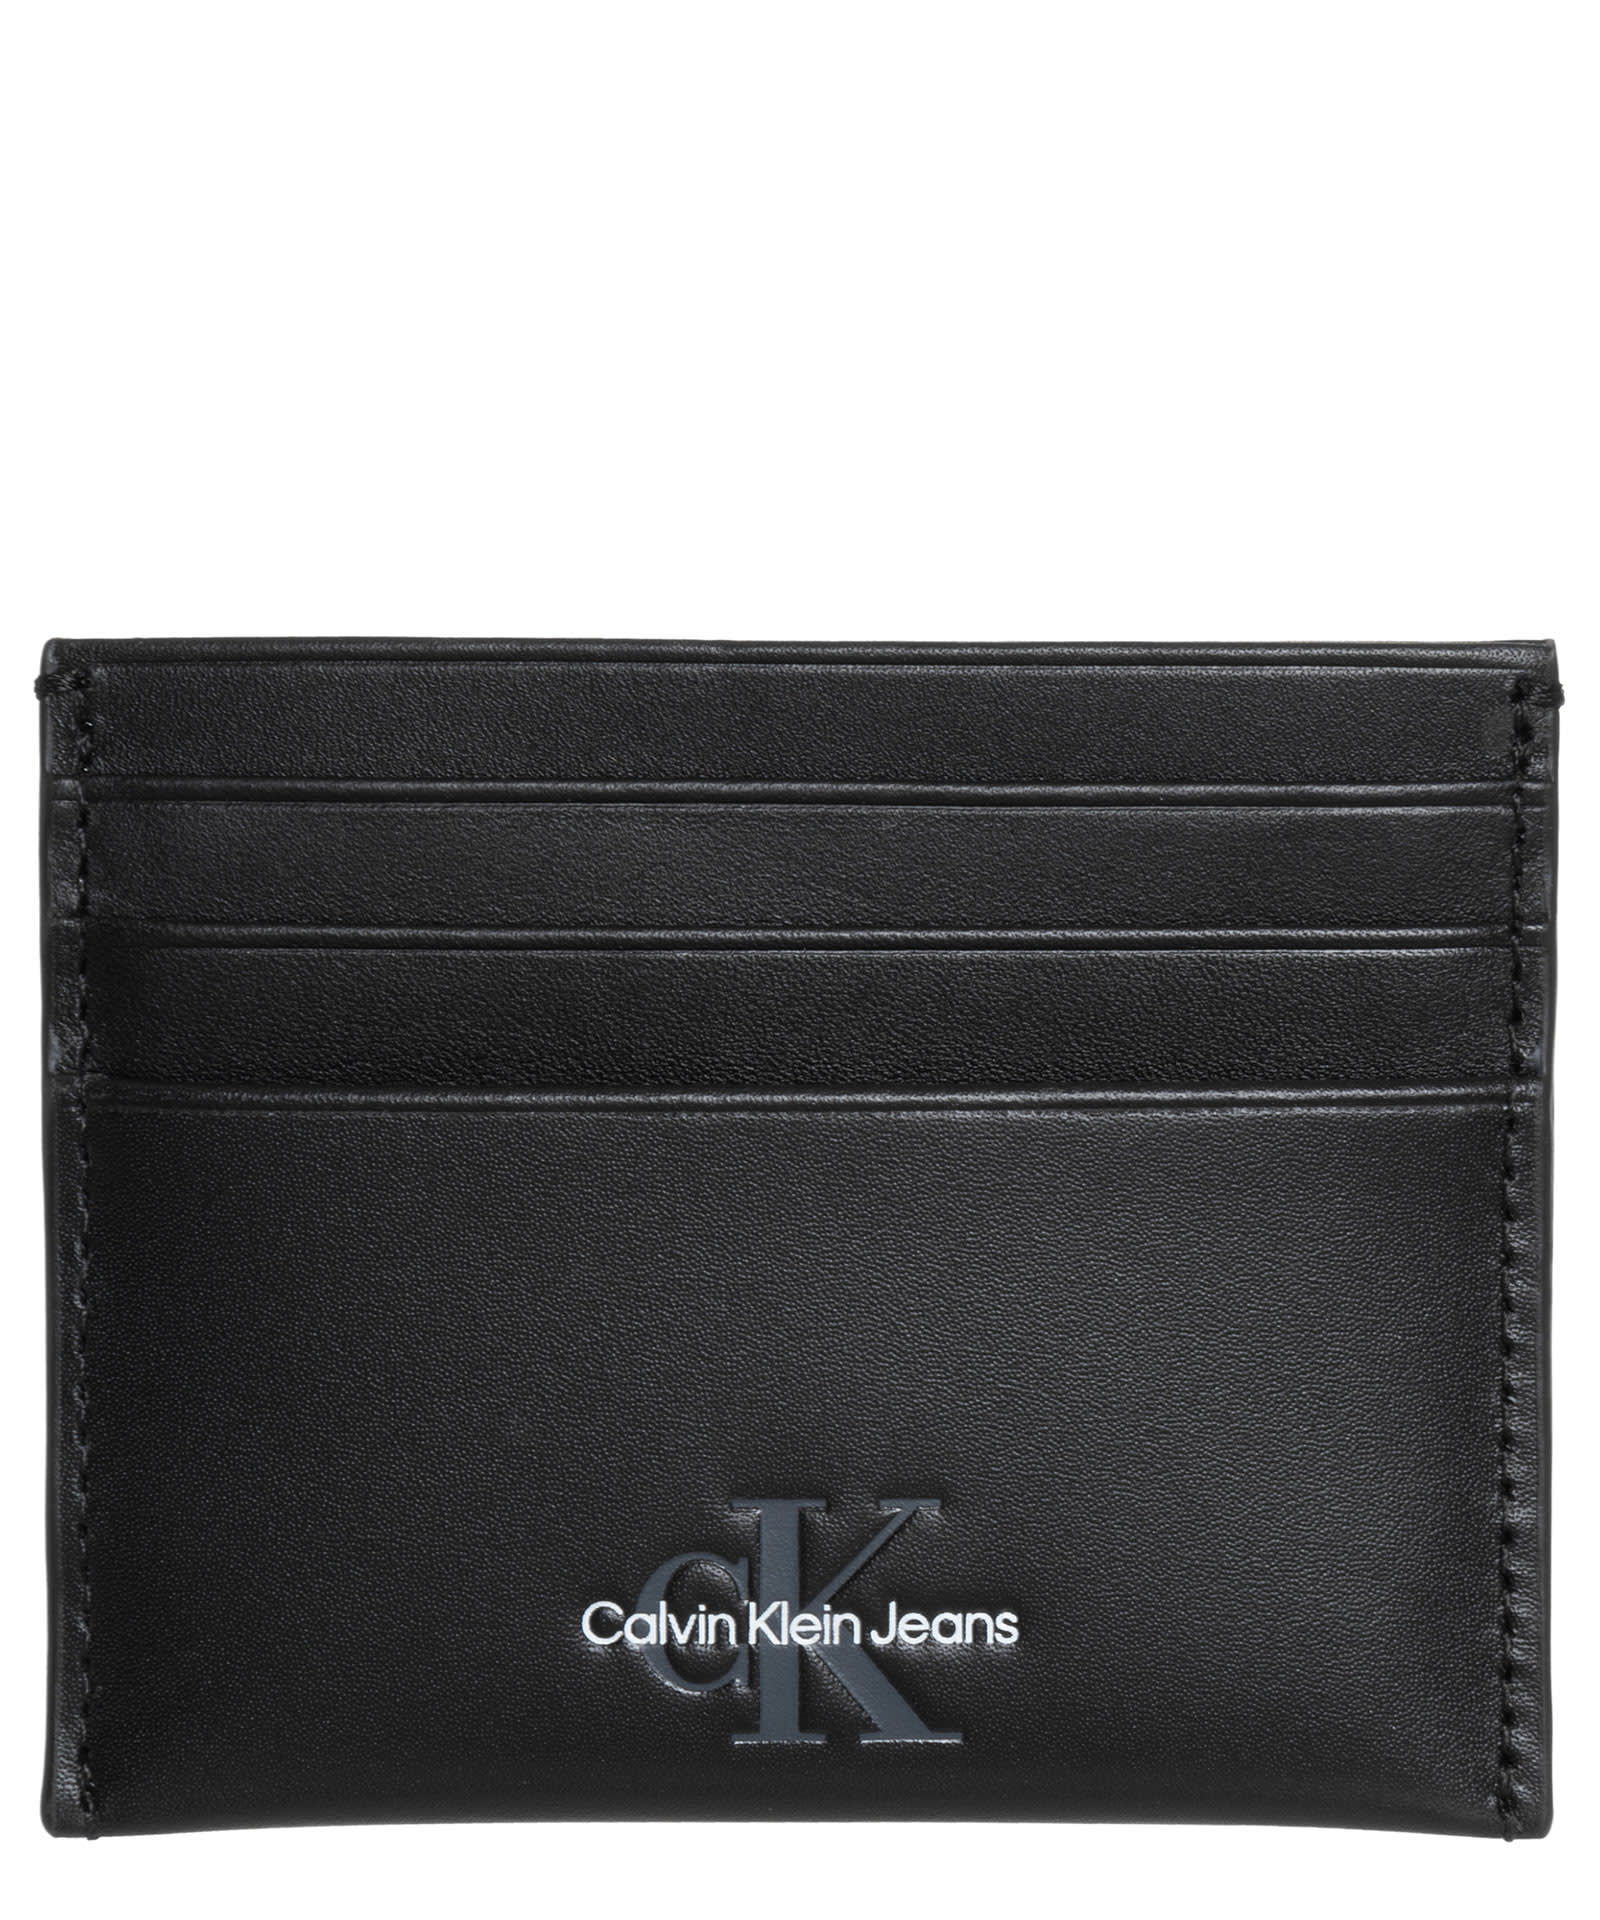 Calvin Klein Jeans Leather Credit Card Holder